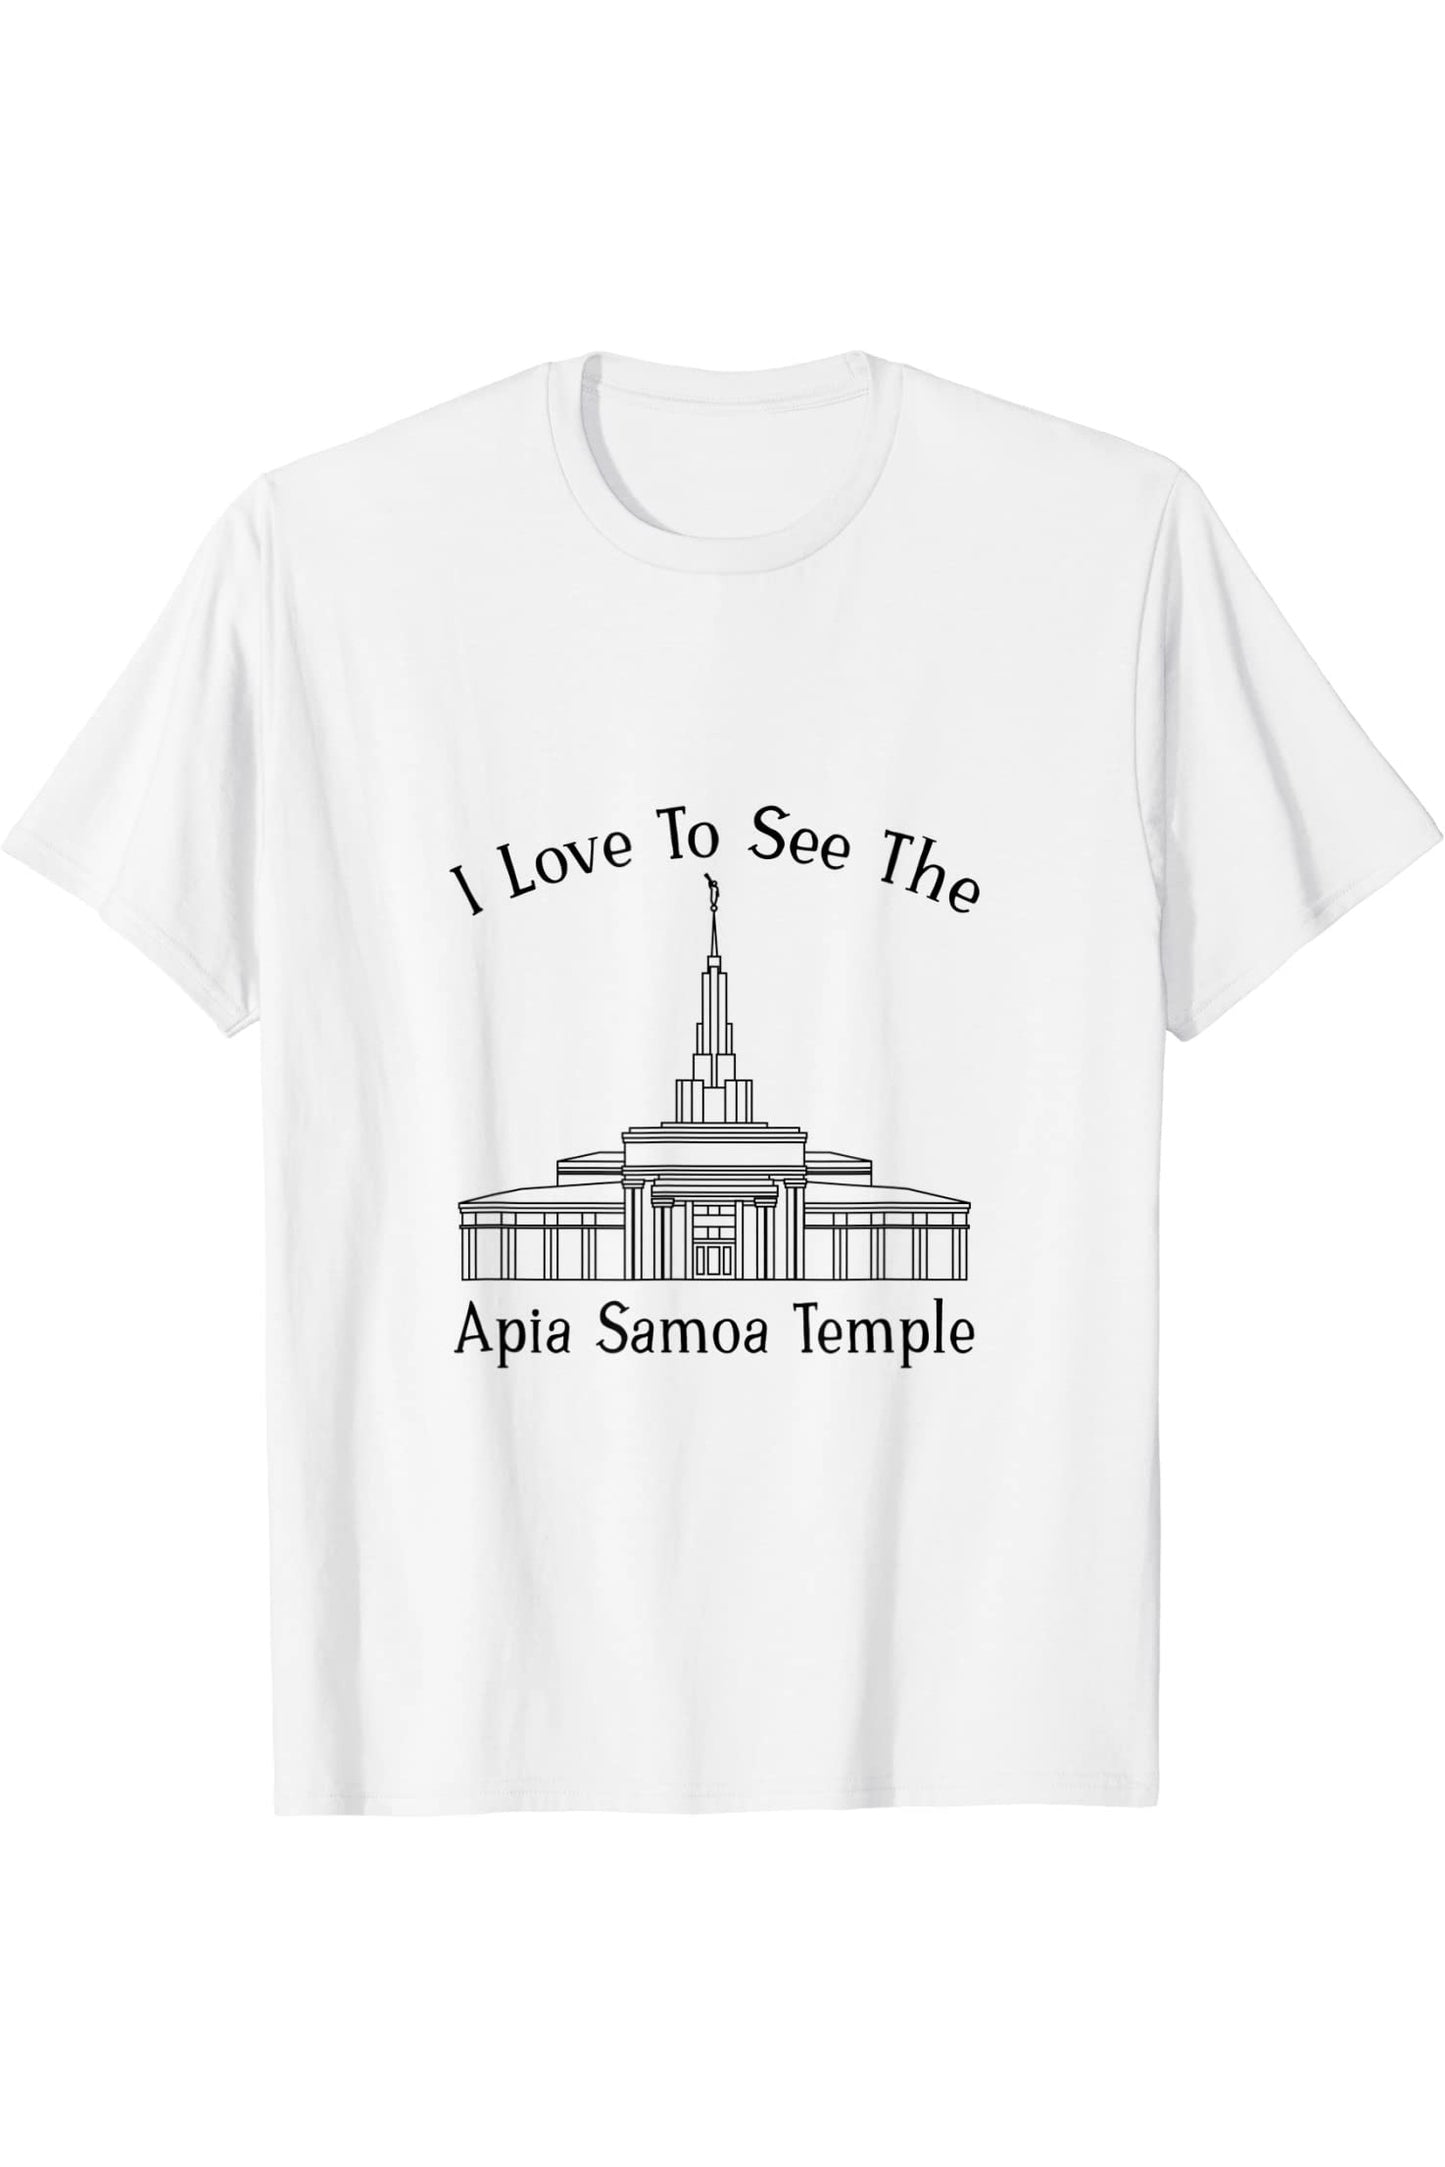 Apia Samoa Temple T-Shirt - Happy Style (English) US